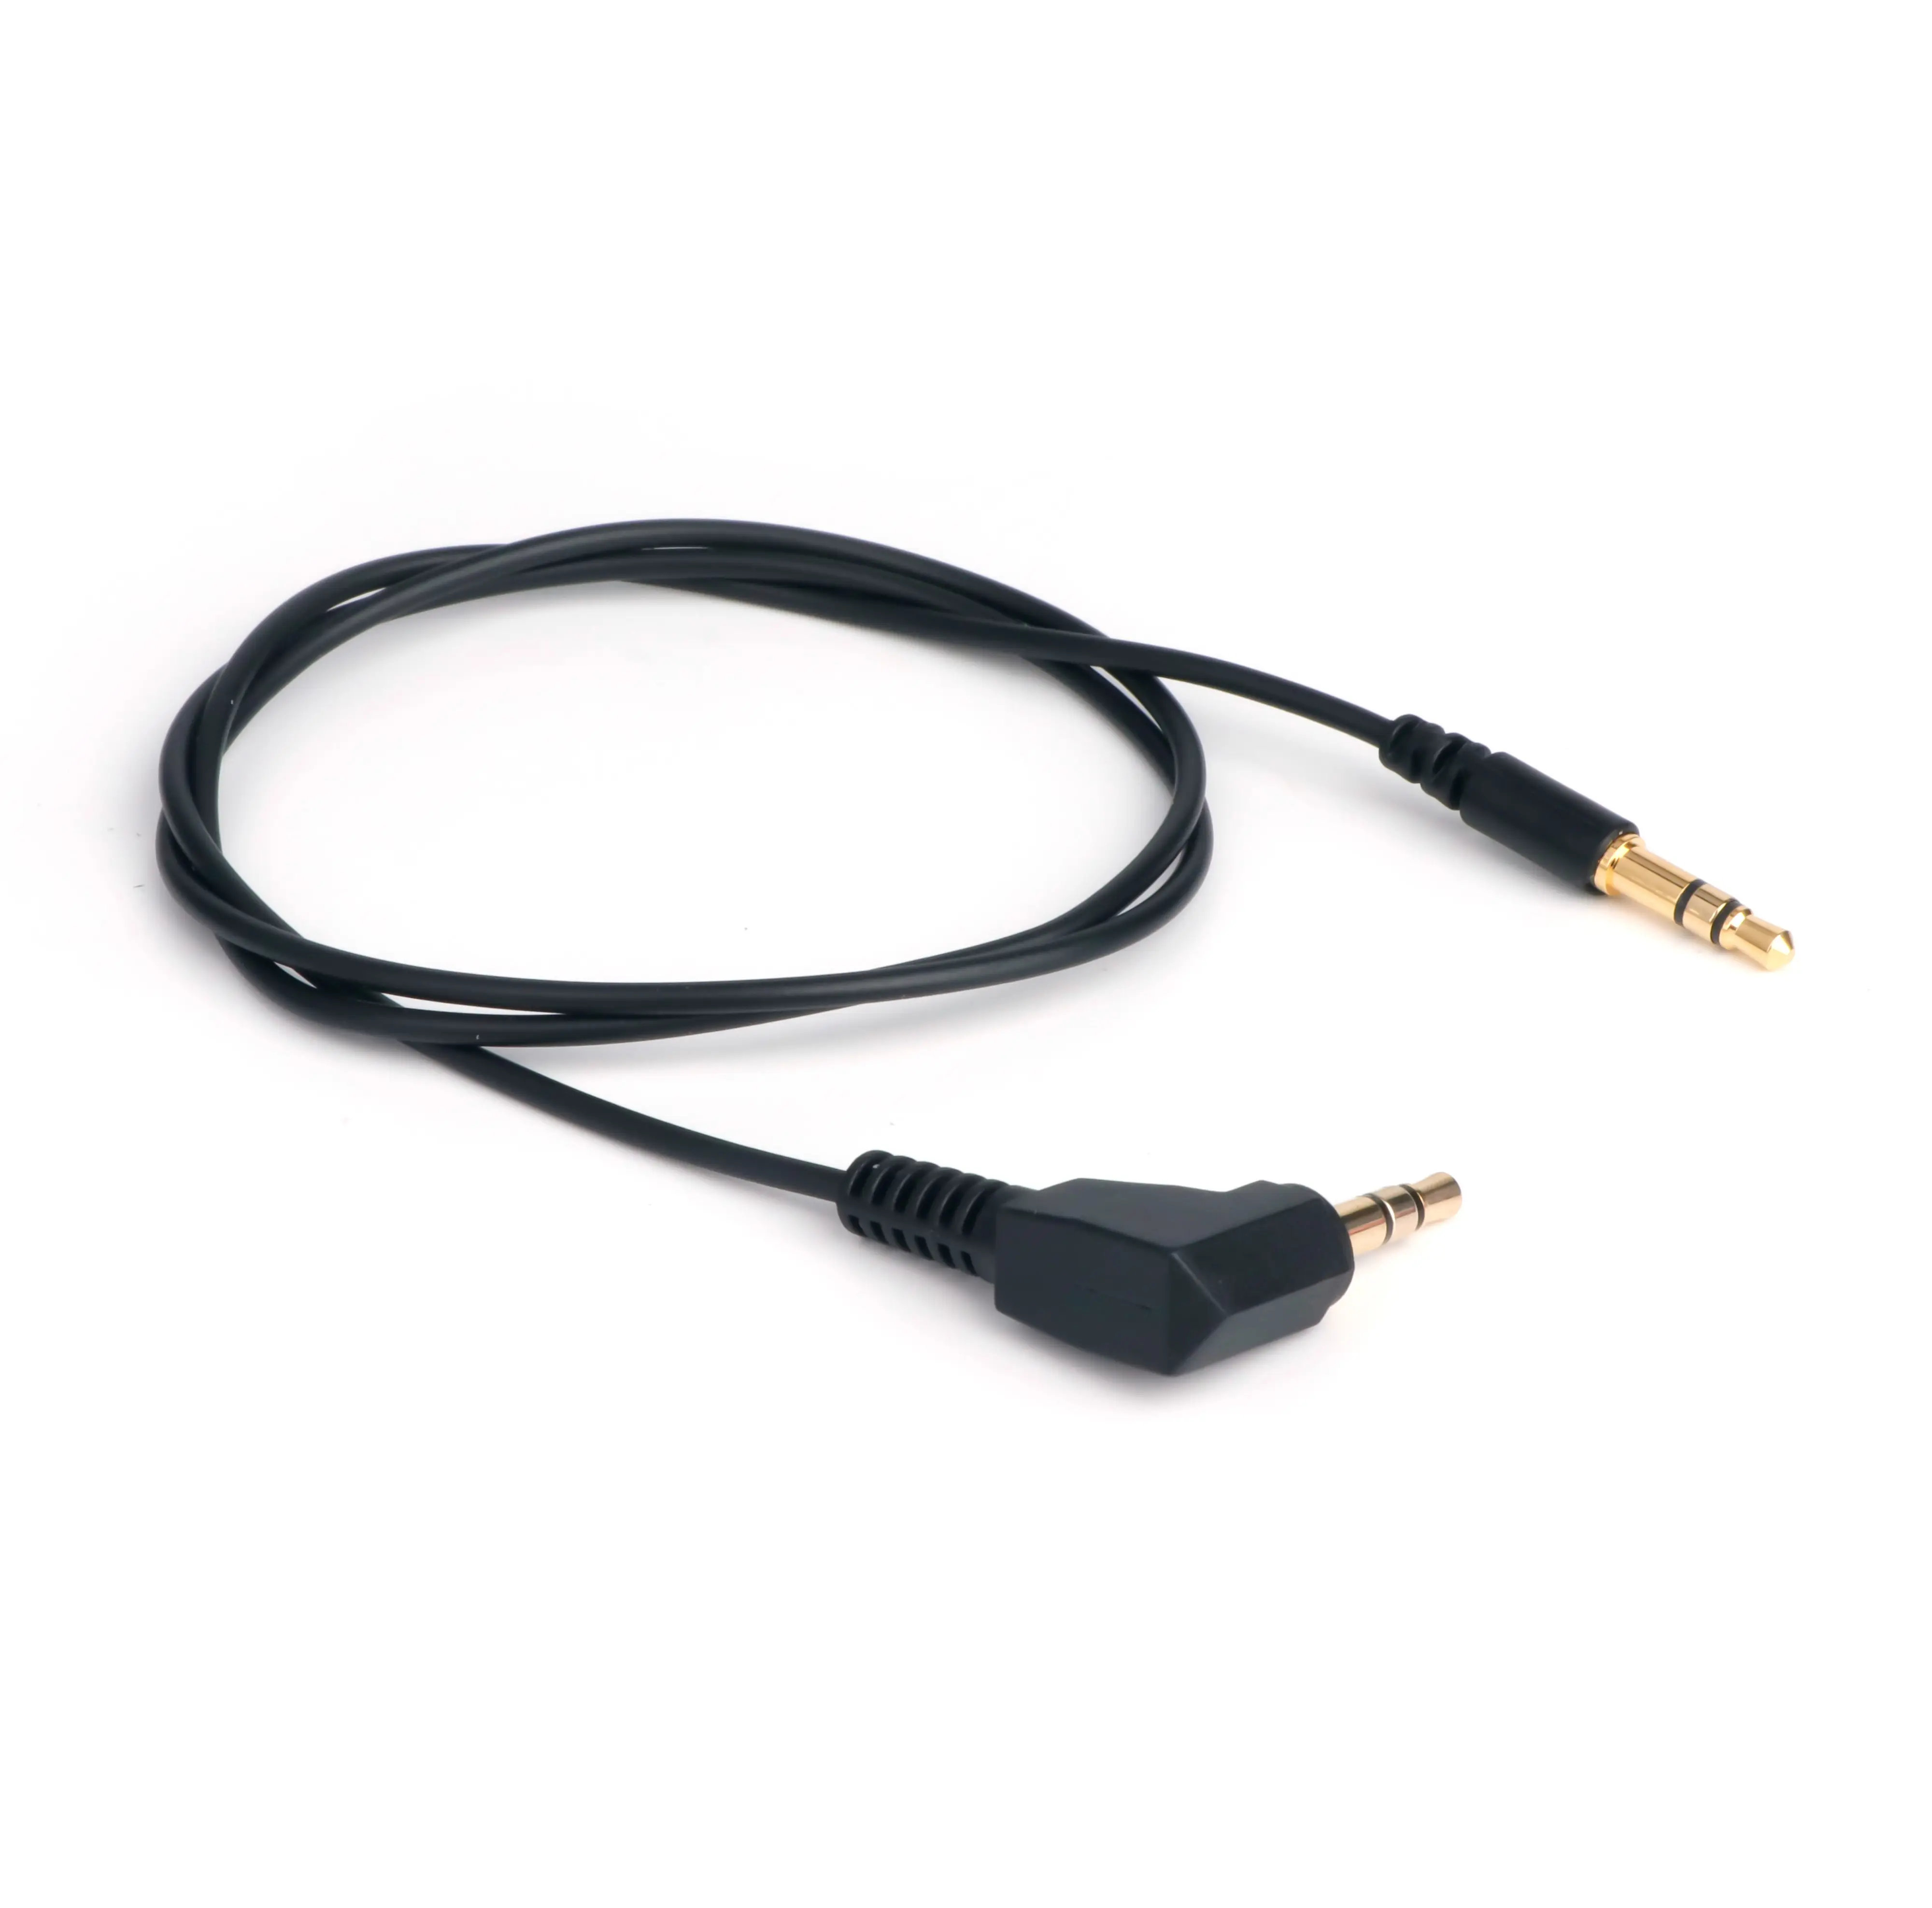 Kabel Audio Aux antarmuka Stereo lurus pria ke laki-laki Stereo 90 derajat laki-laki 3.5MM kustom